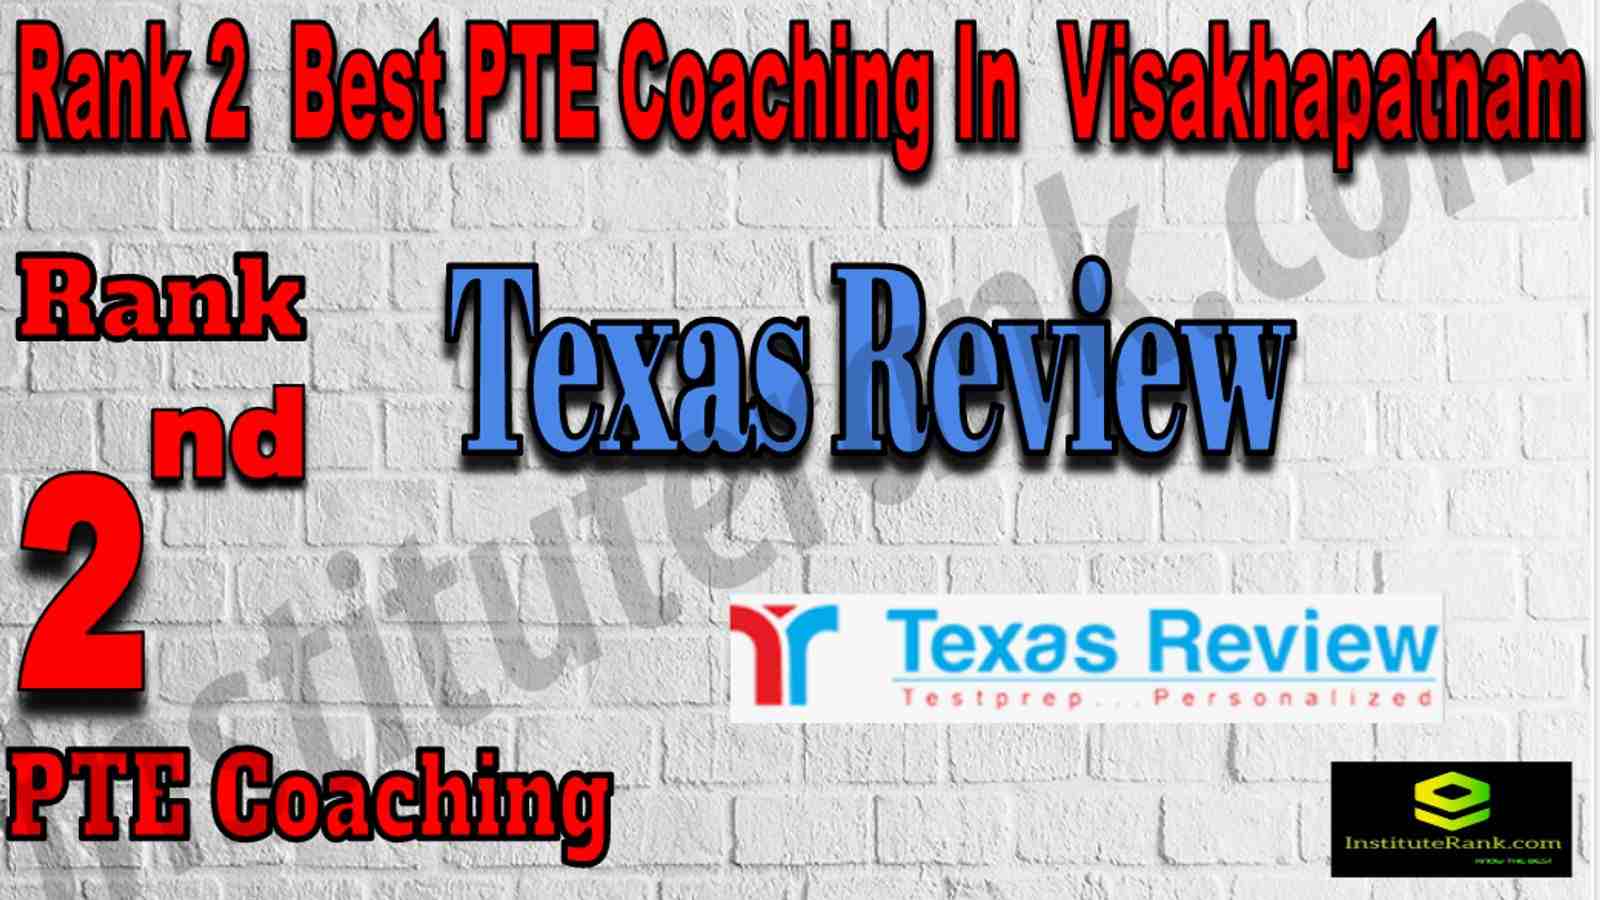 Rank 2 Best PTE Coaching In Visakhapatnam